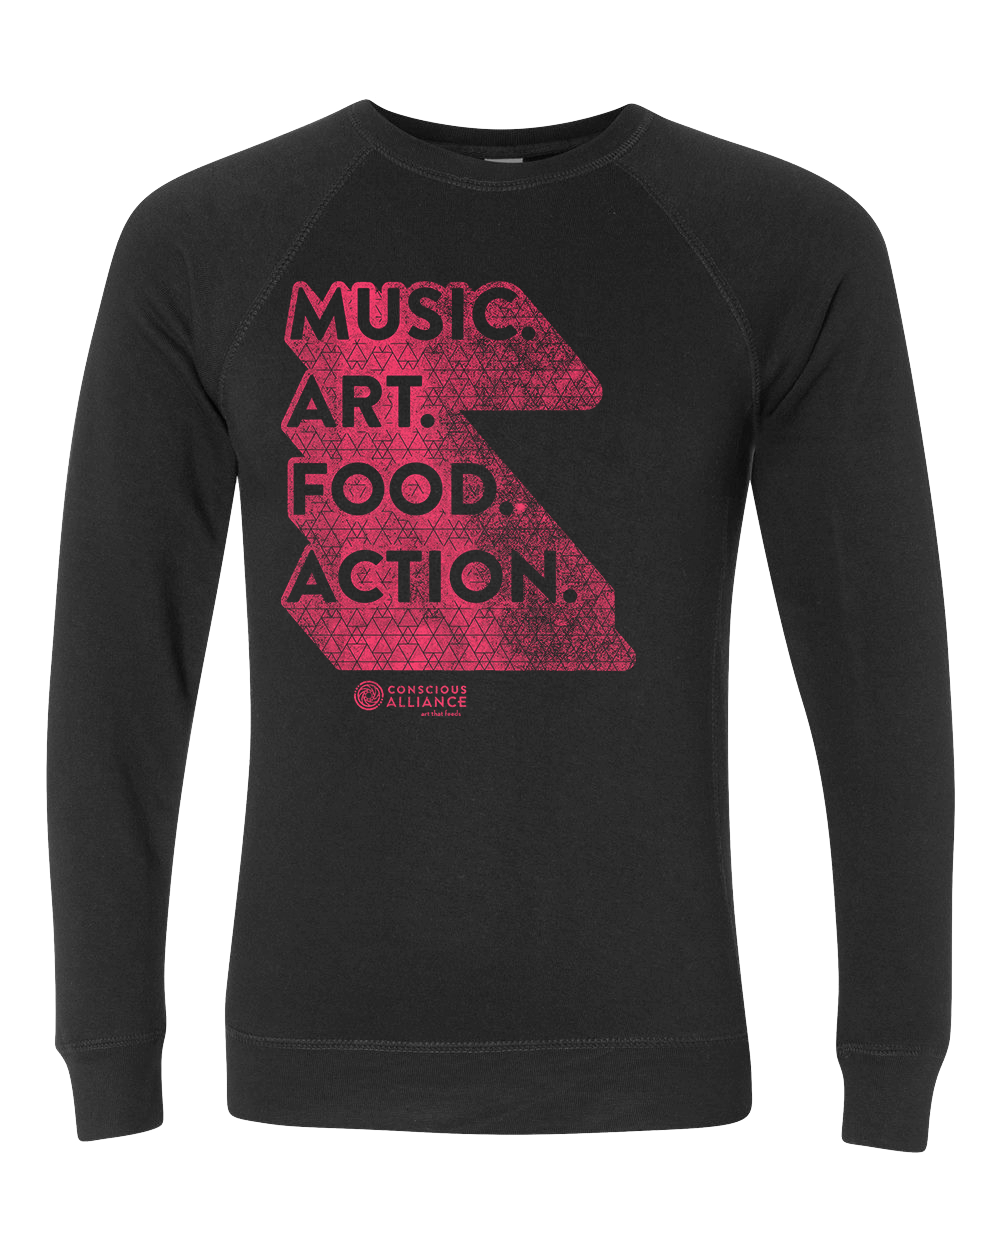 Music. Art. Food. Action. Crewneck Sweatshirt